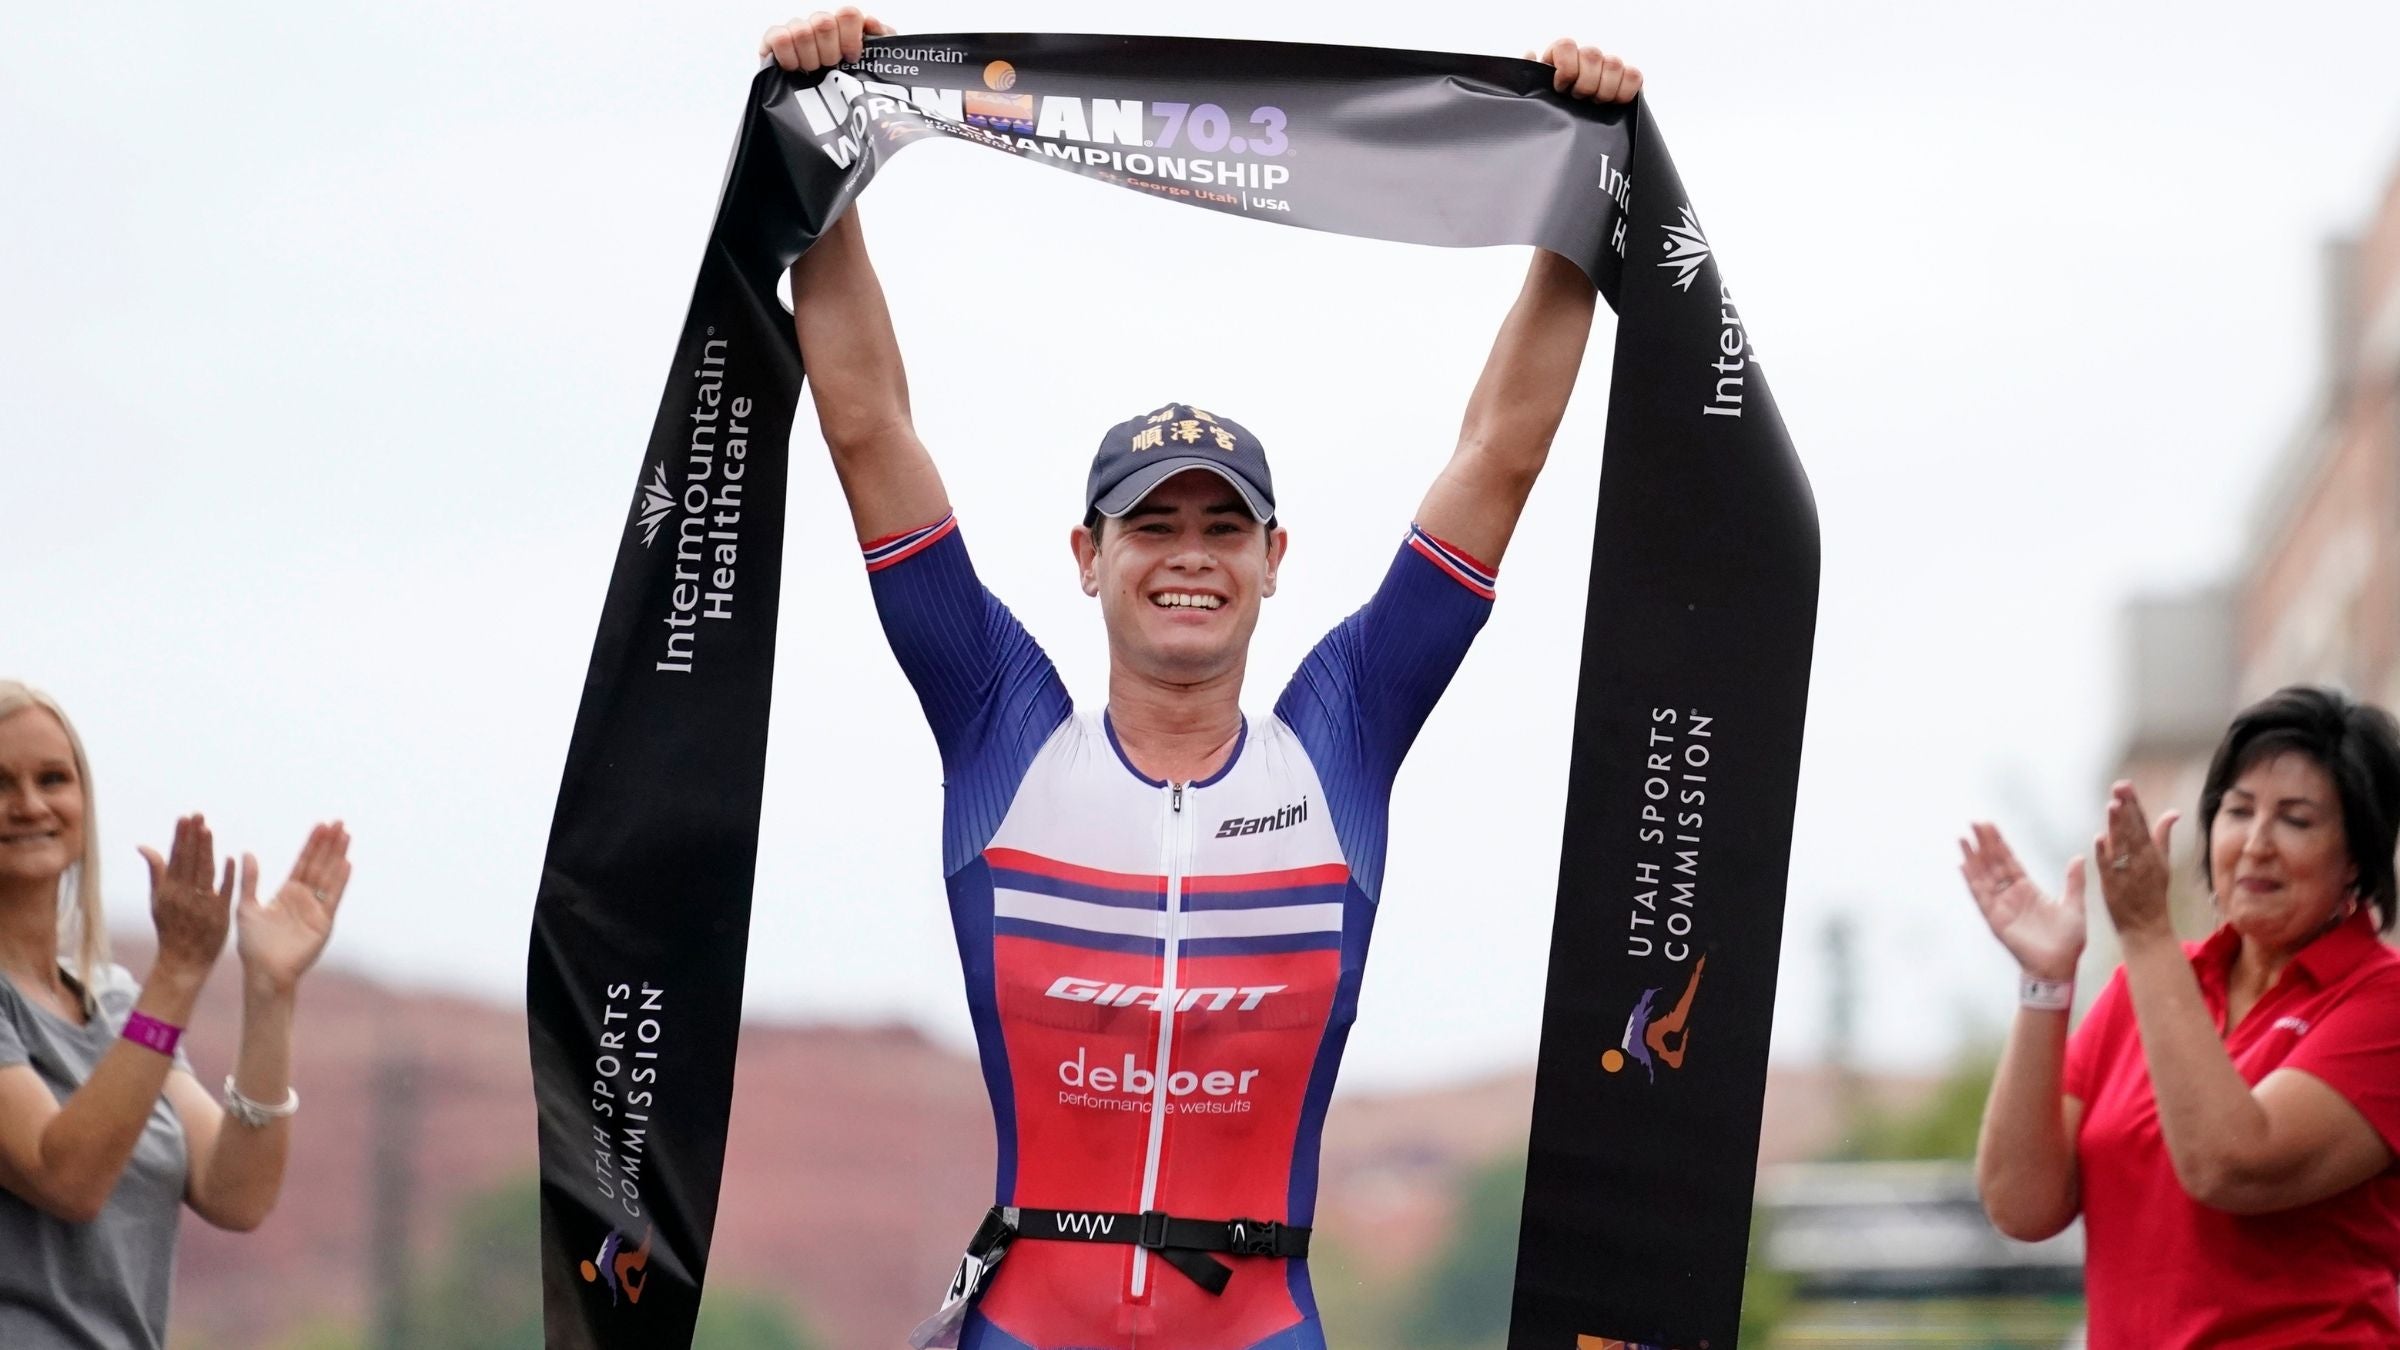 Gustav Iden will race the Ironman world championship kona men's pro race